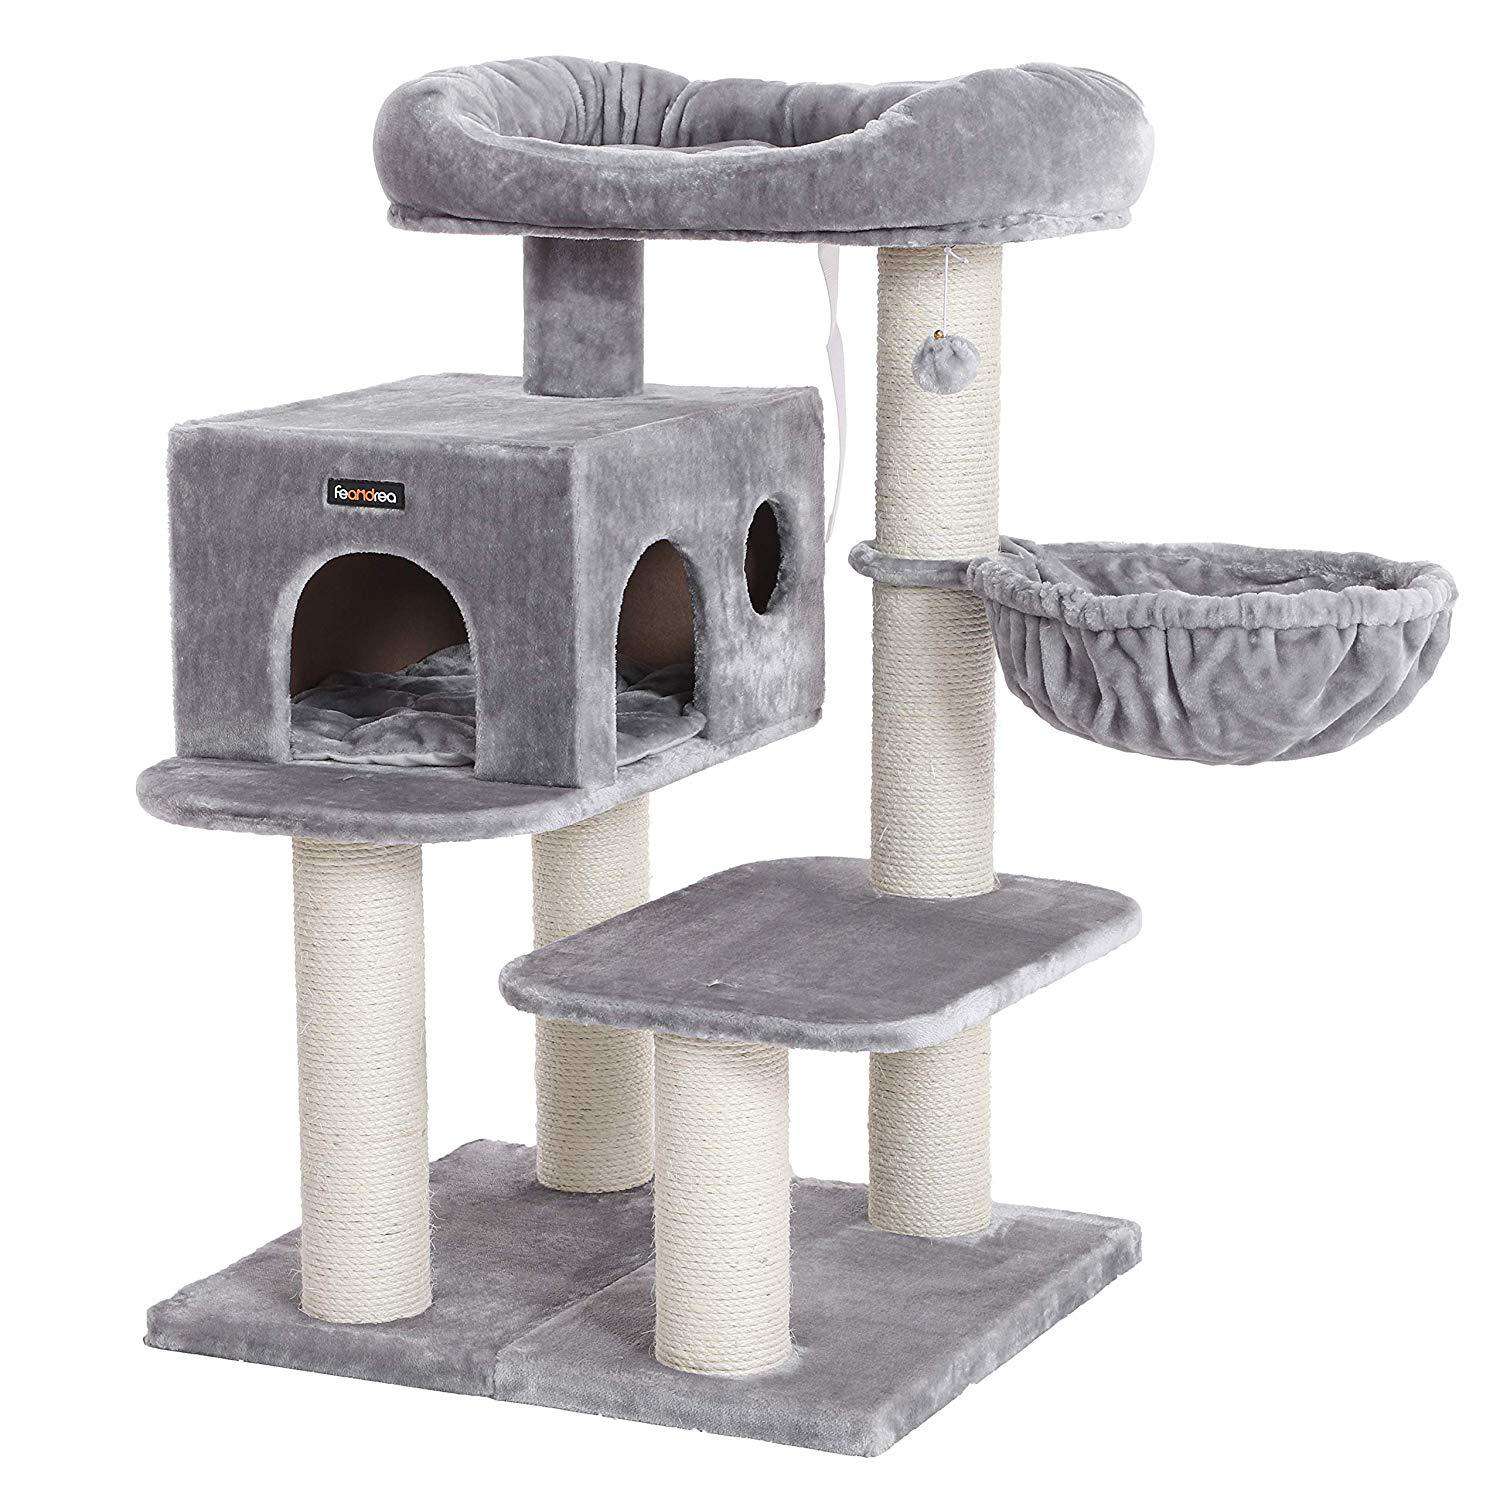 Nancy's Cat Tower - Adjustable Cat Tree - Cat House - Scratching Post - Gray - 70 x 60 x 112 cm